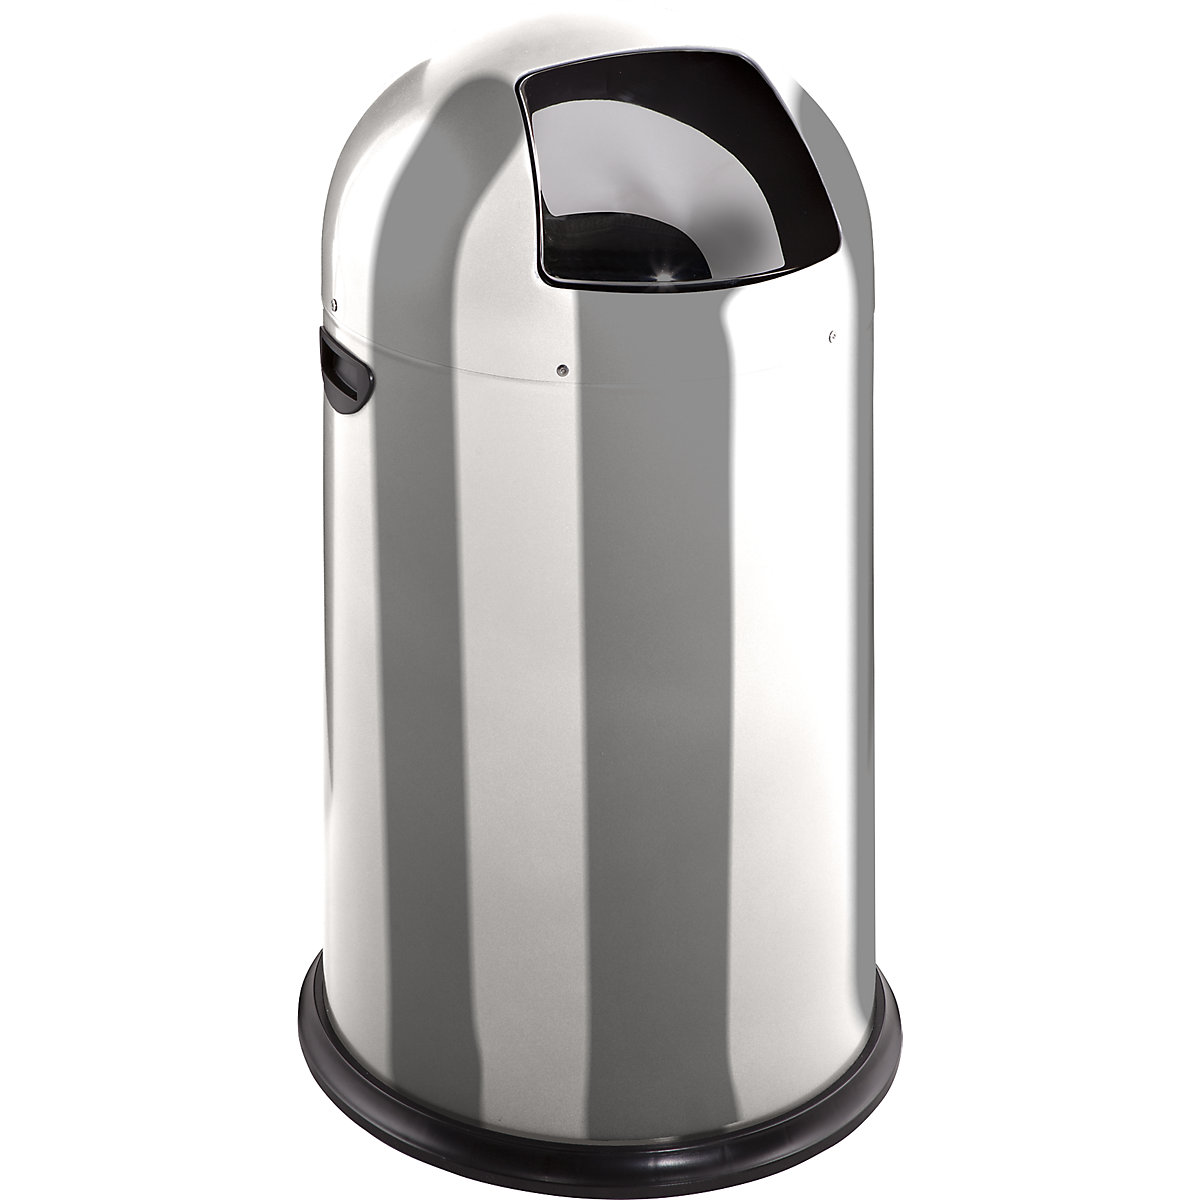 VAR – Coș de gunoi cu capac rabatabil, volum 40 l, înălțime 740 mm, inox